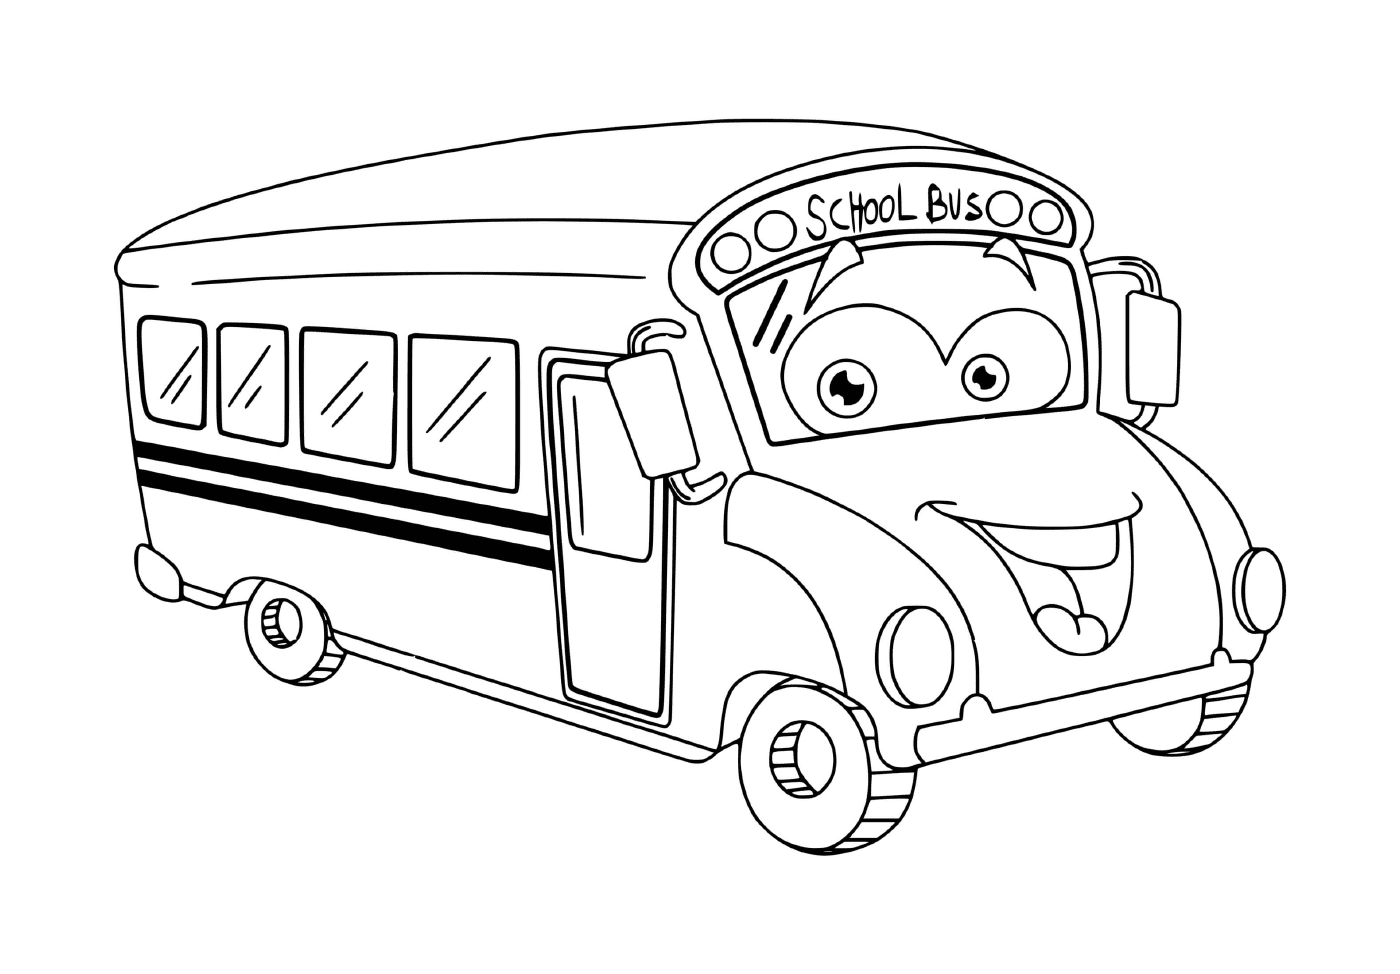  A school bus for children 